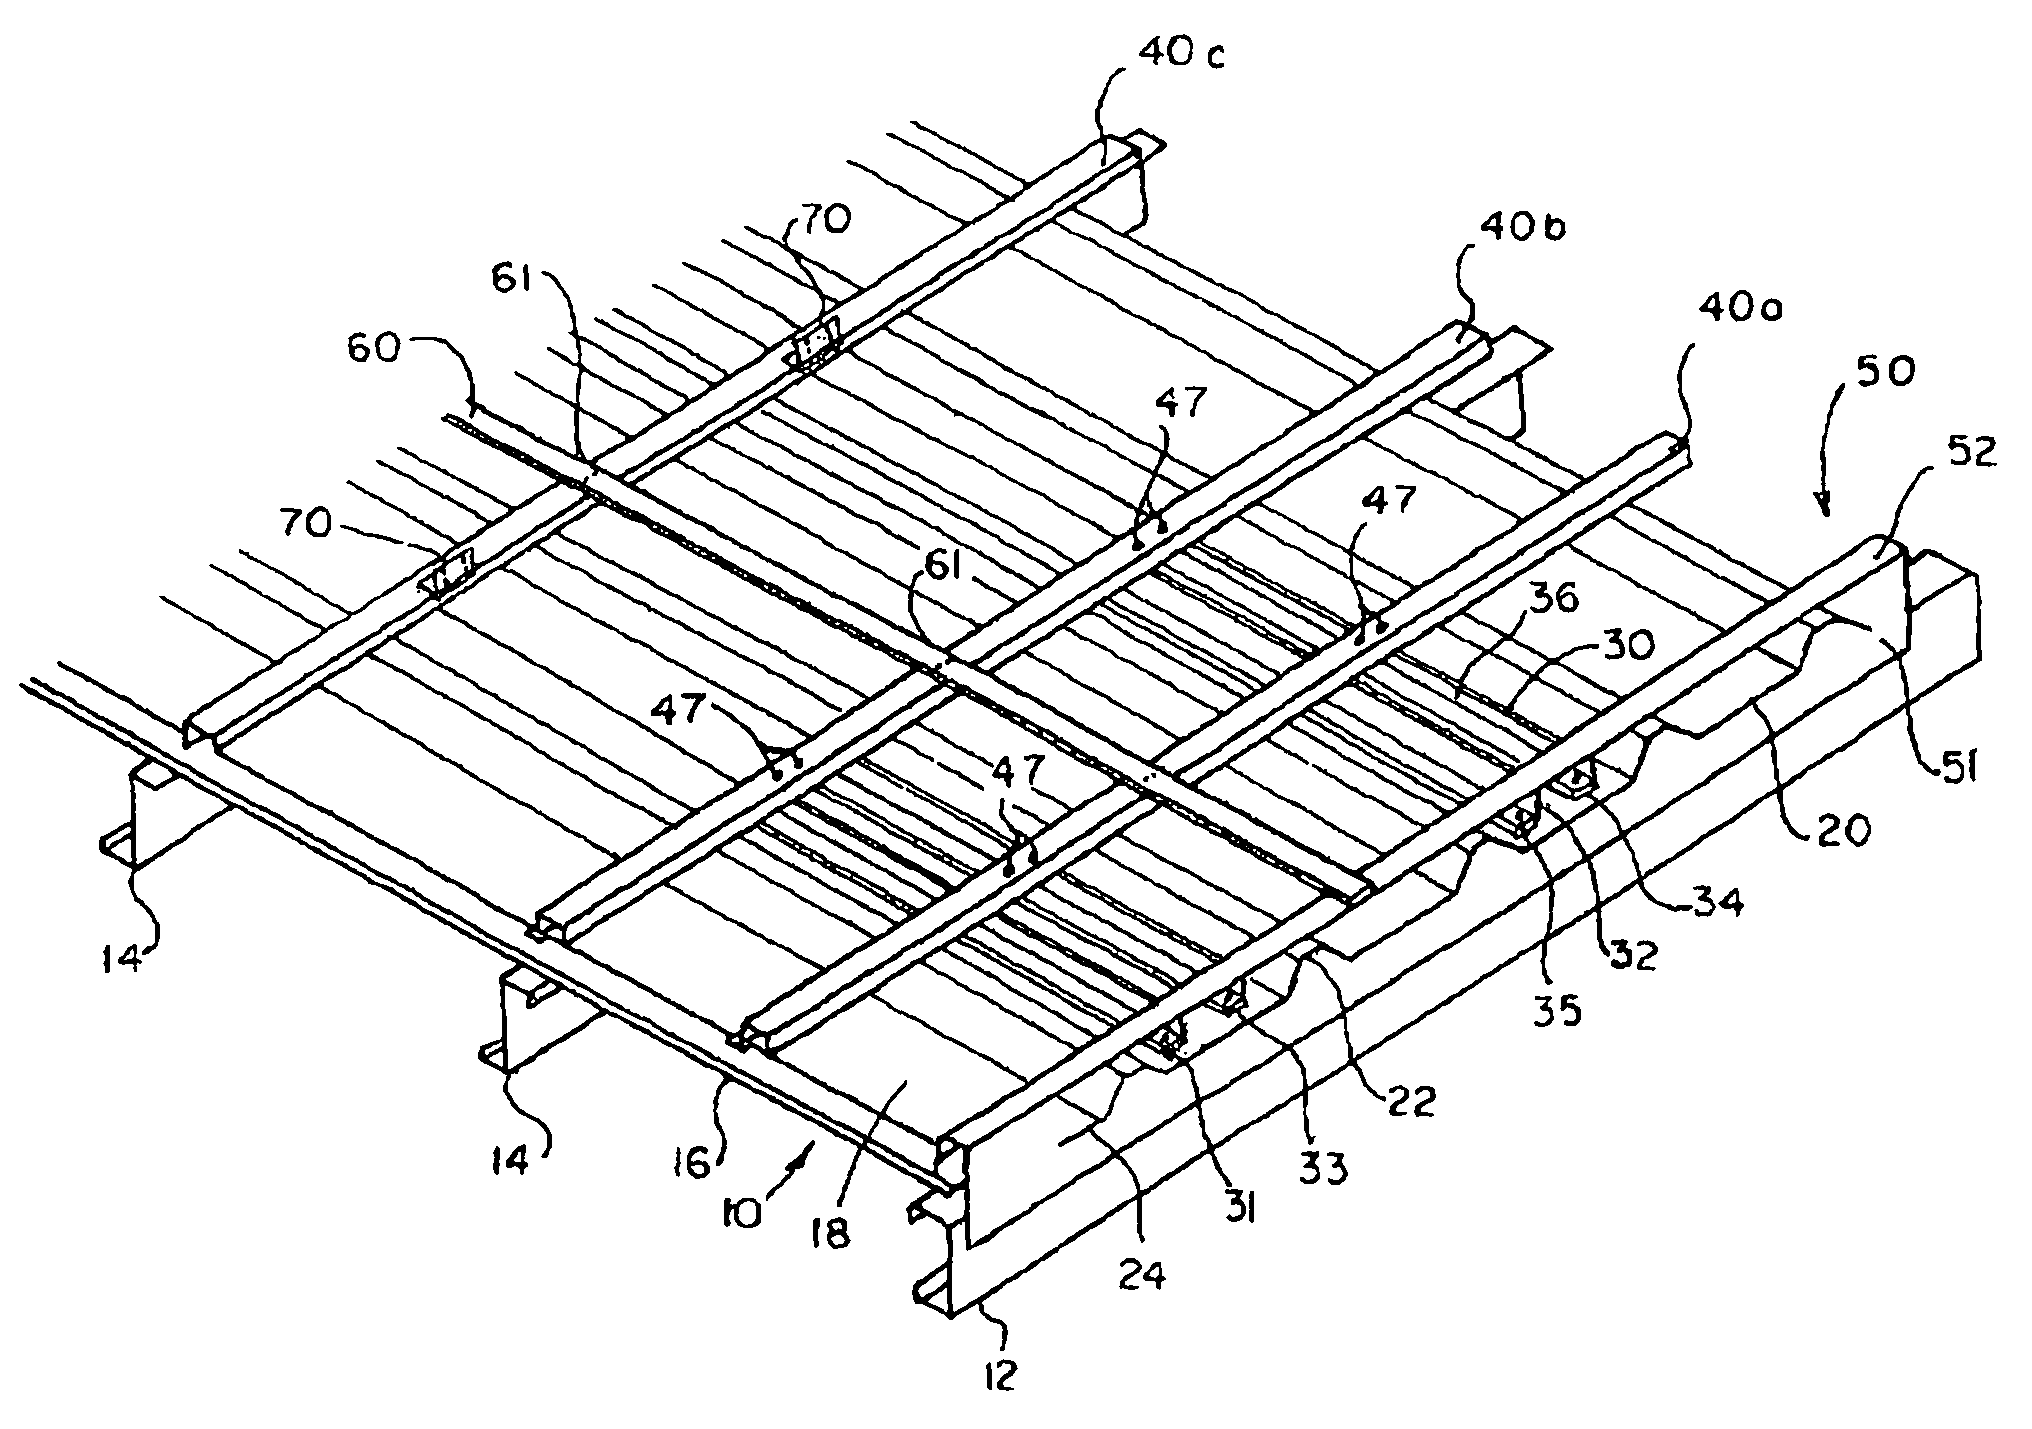 Retrofit framing system for metal roof